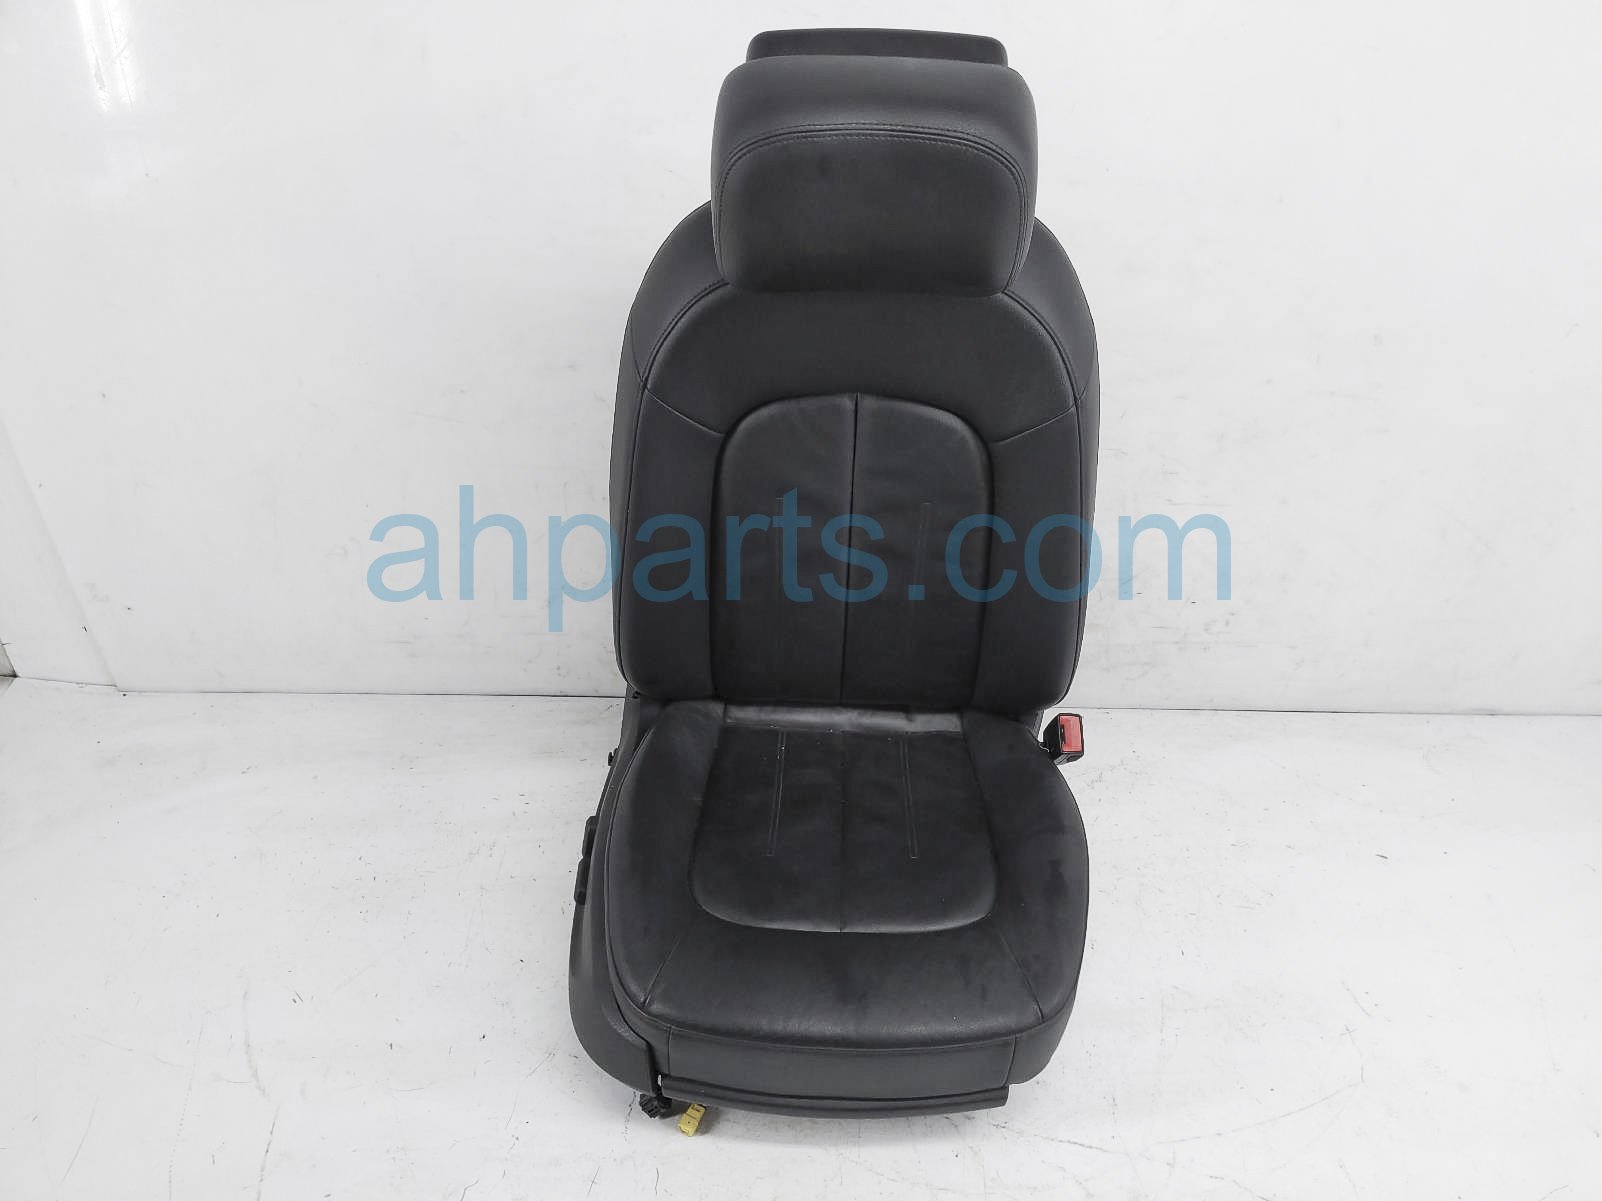 $195 Audi FR/RH SEAT - BLACK - W/ AIRBAG